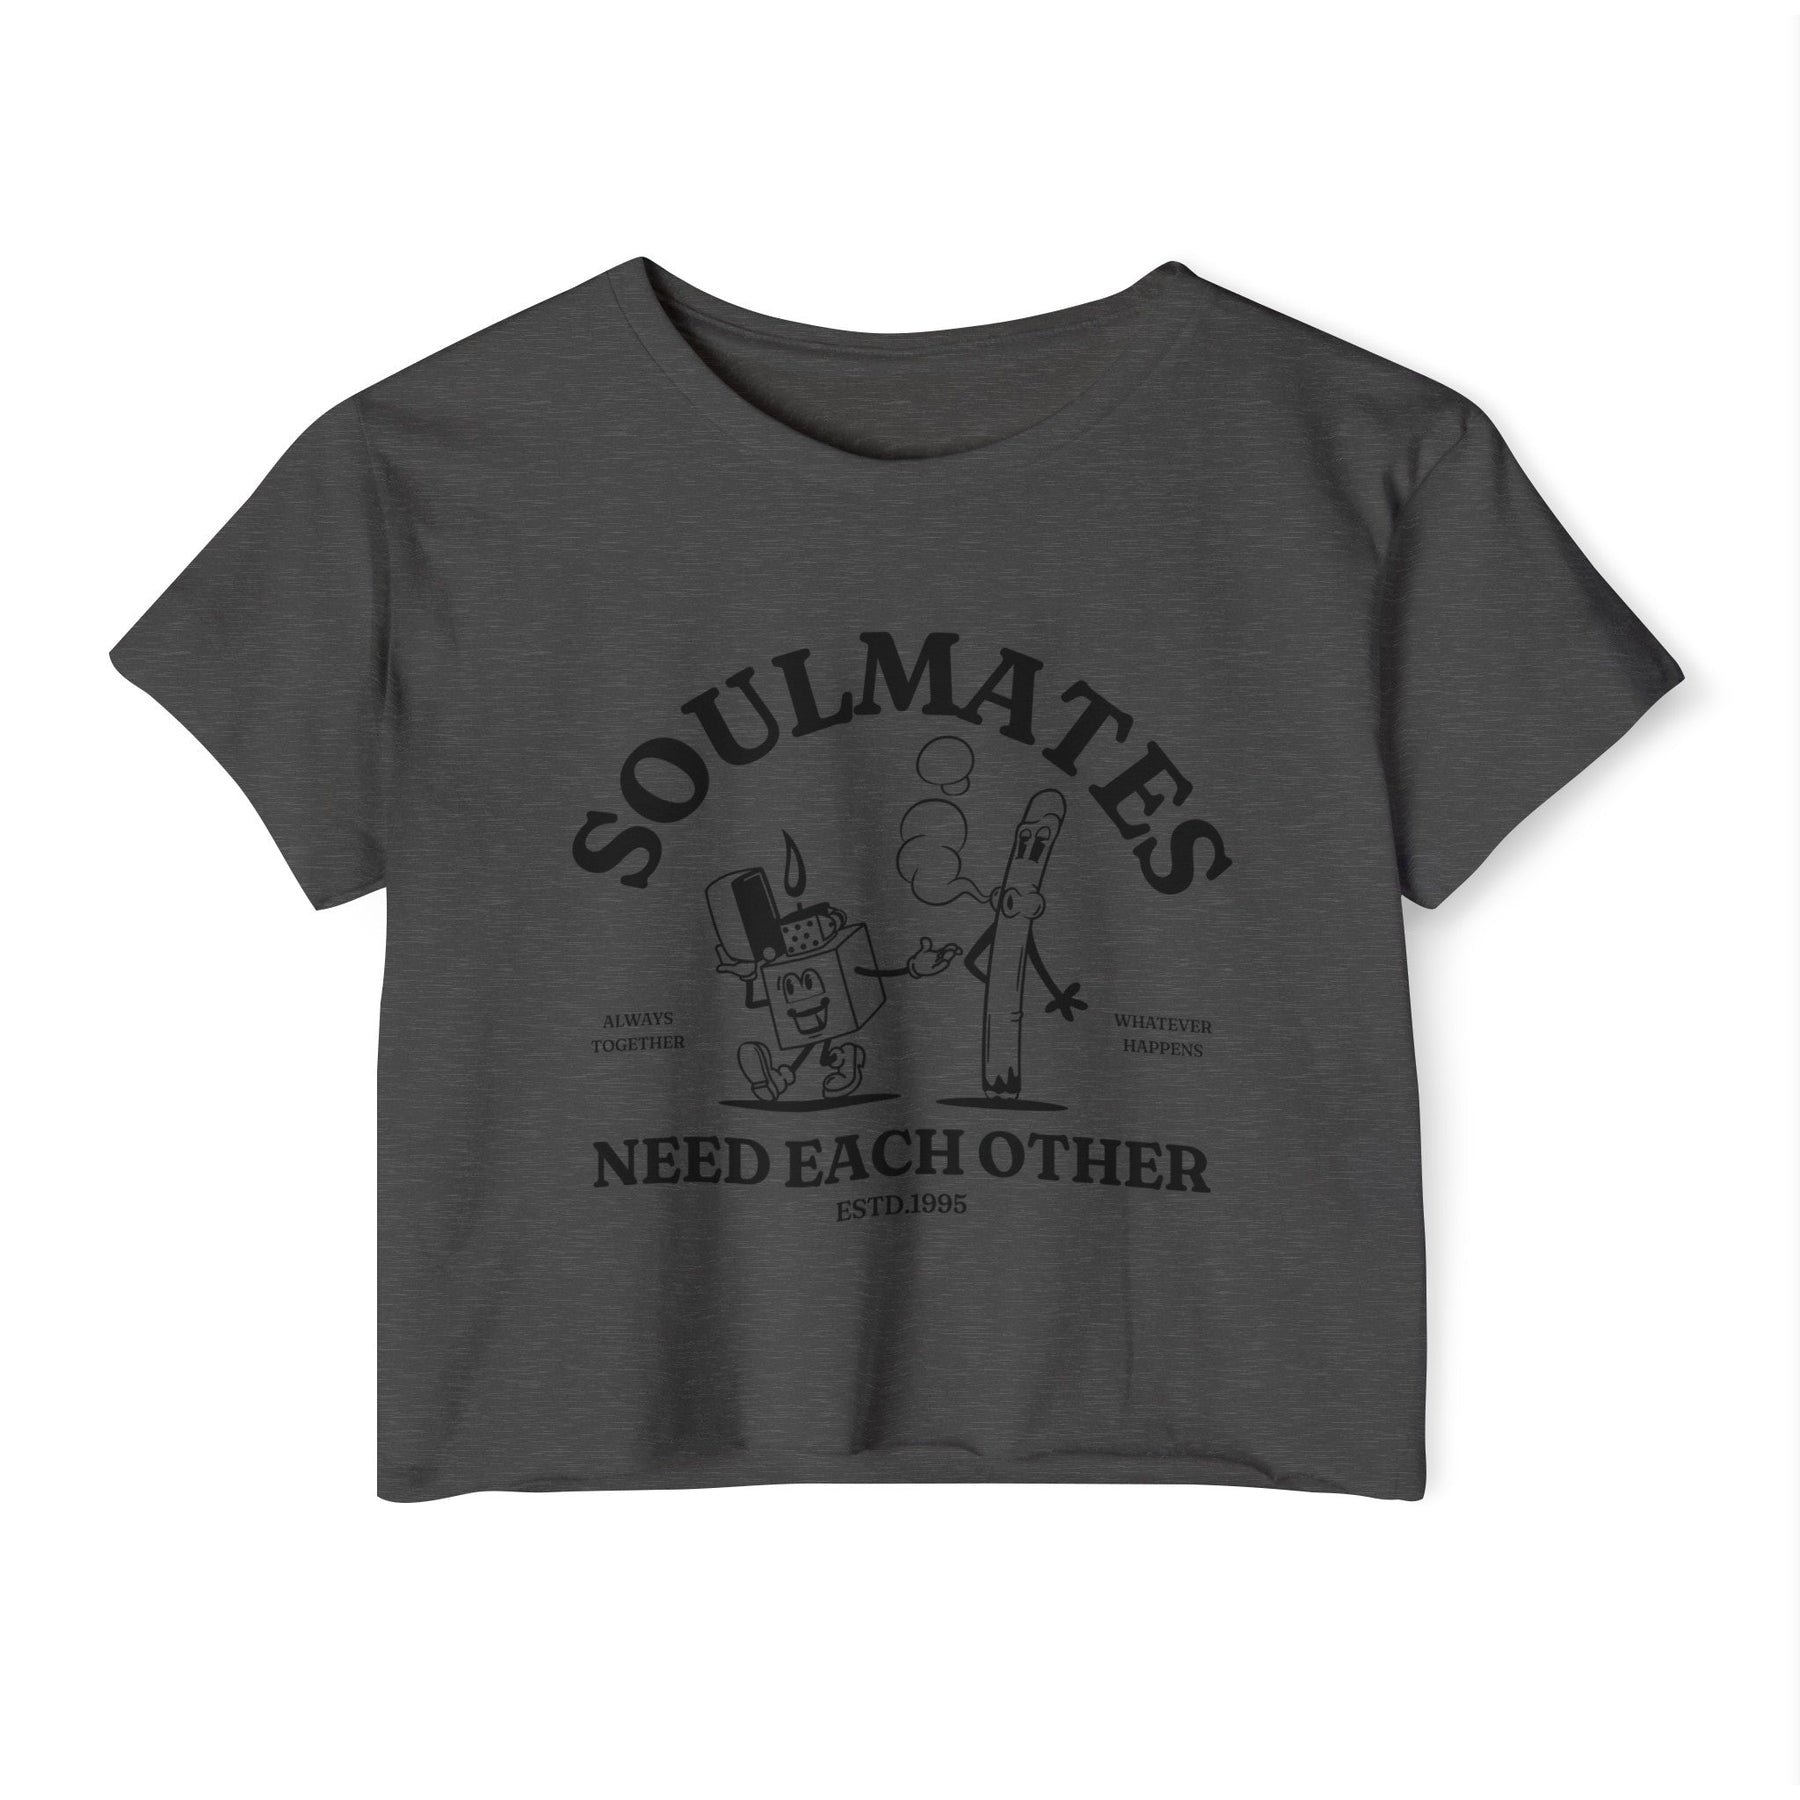 Soulmates Women's Crop Top - Goth Cloth Co.T - Shirt80476715794955572730